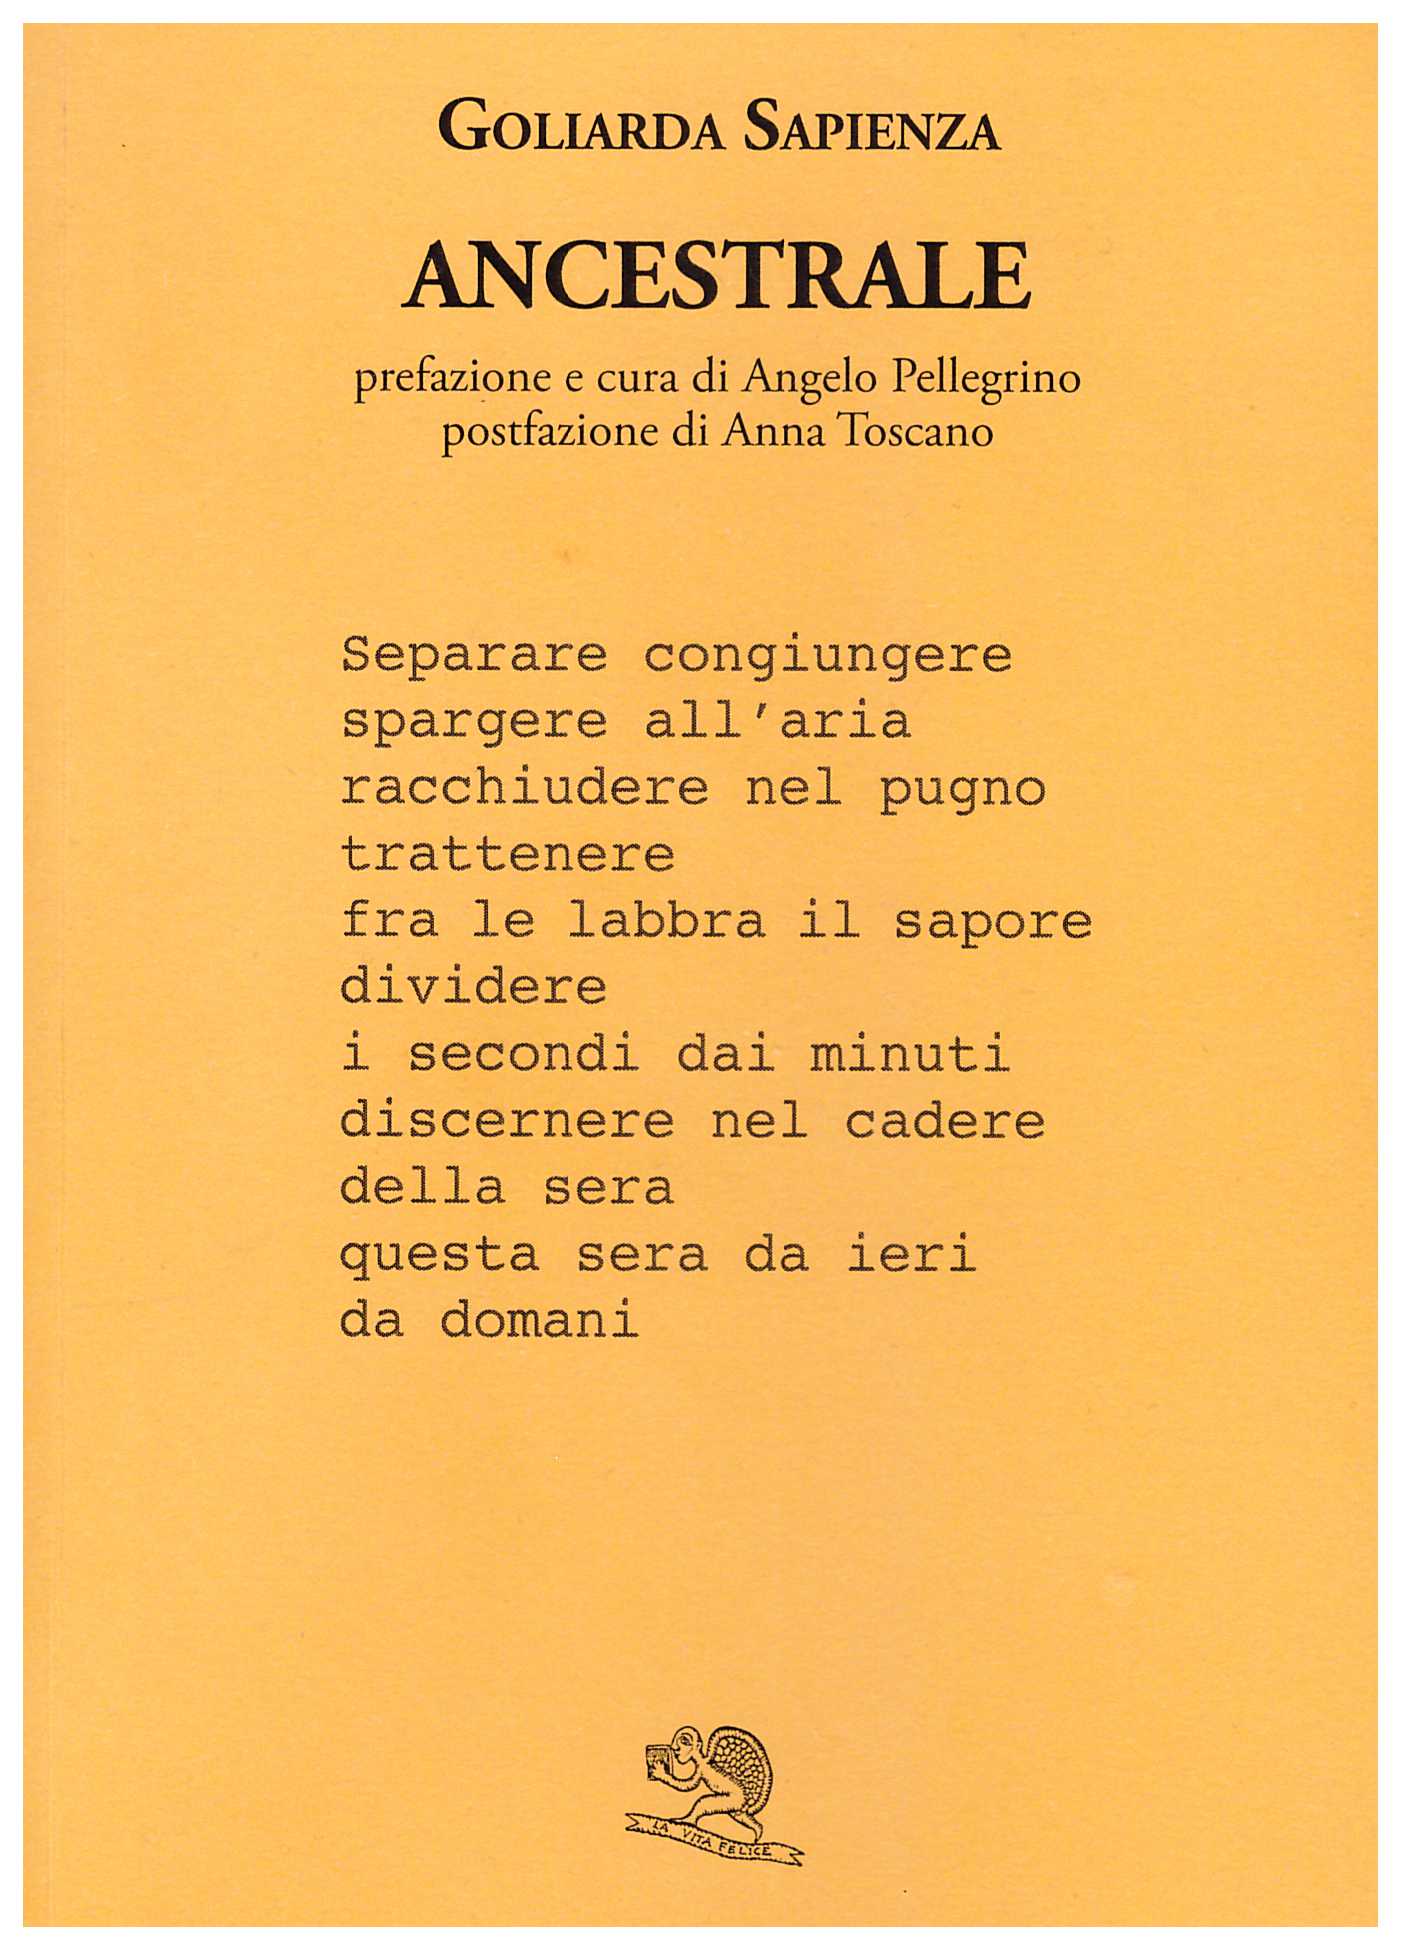 Poesie Di Natale Siciliane.Sette Poesie Da Ancestrale Di Goliarda Sapienza Poetarum Silva